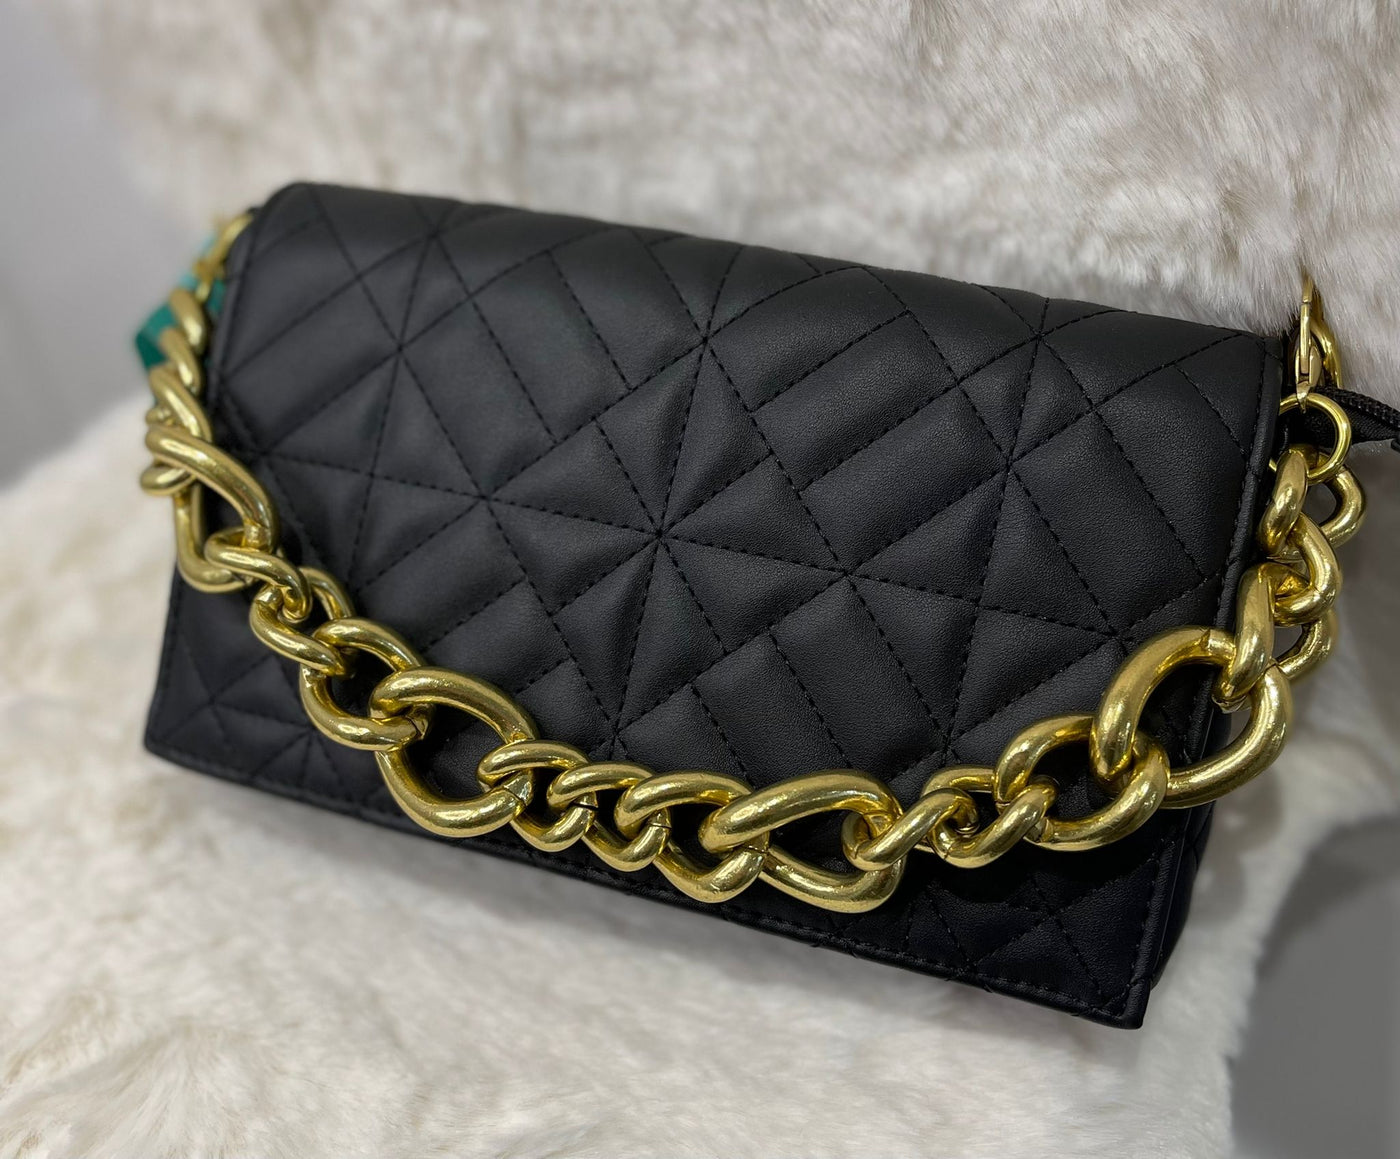 Black stitch pattern design chunky gold handle bag